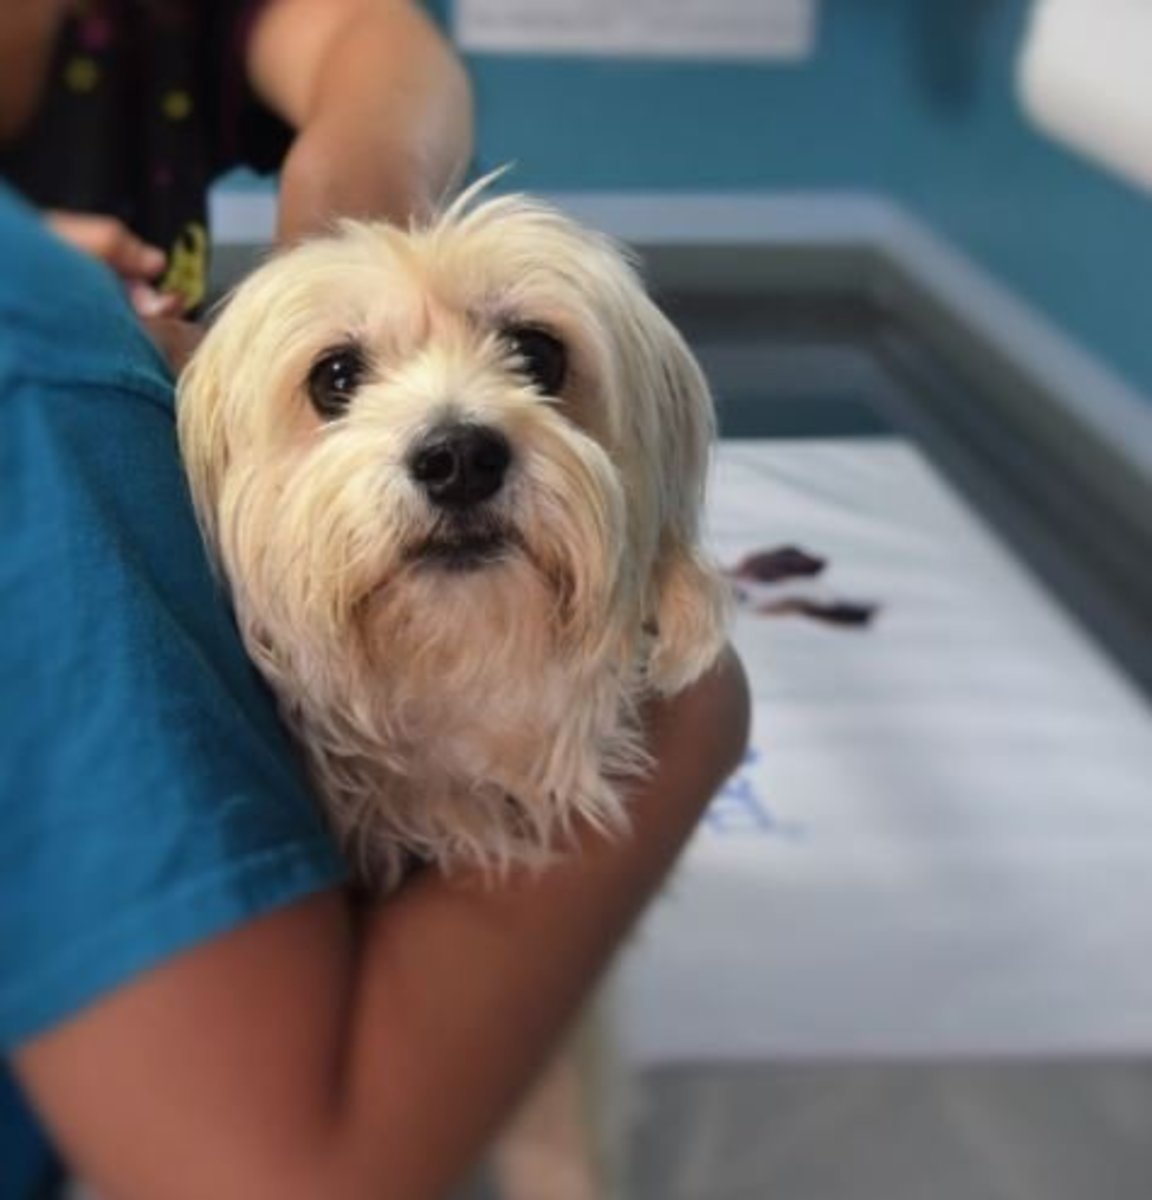 Make sure you take your dog for regular checkups with their vet.